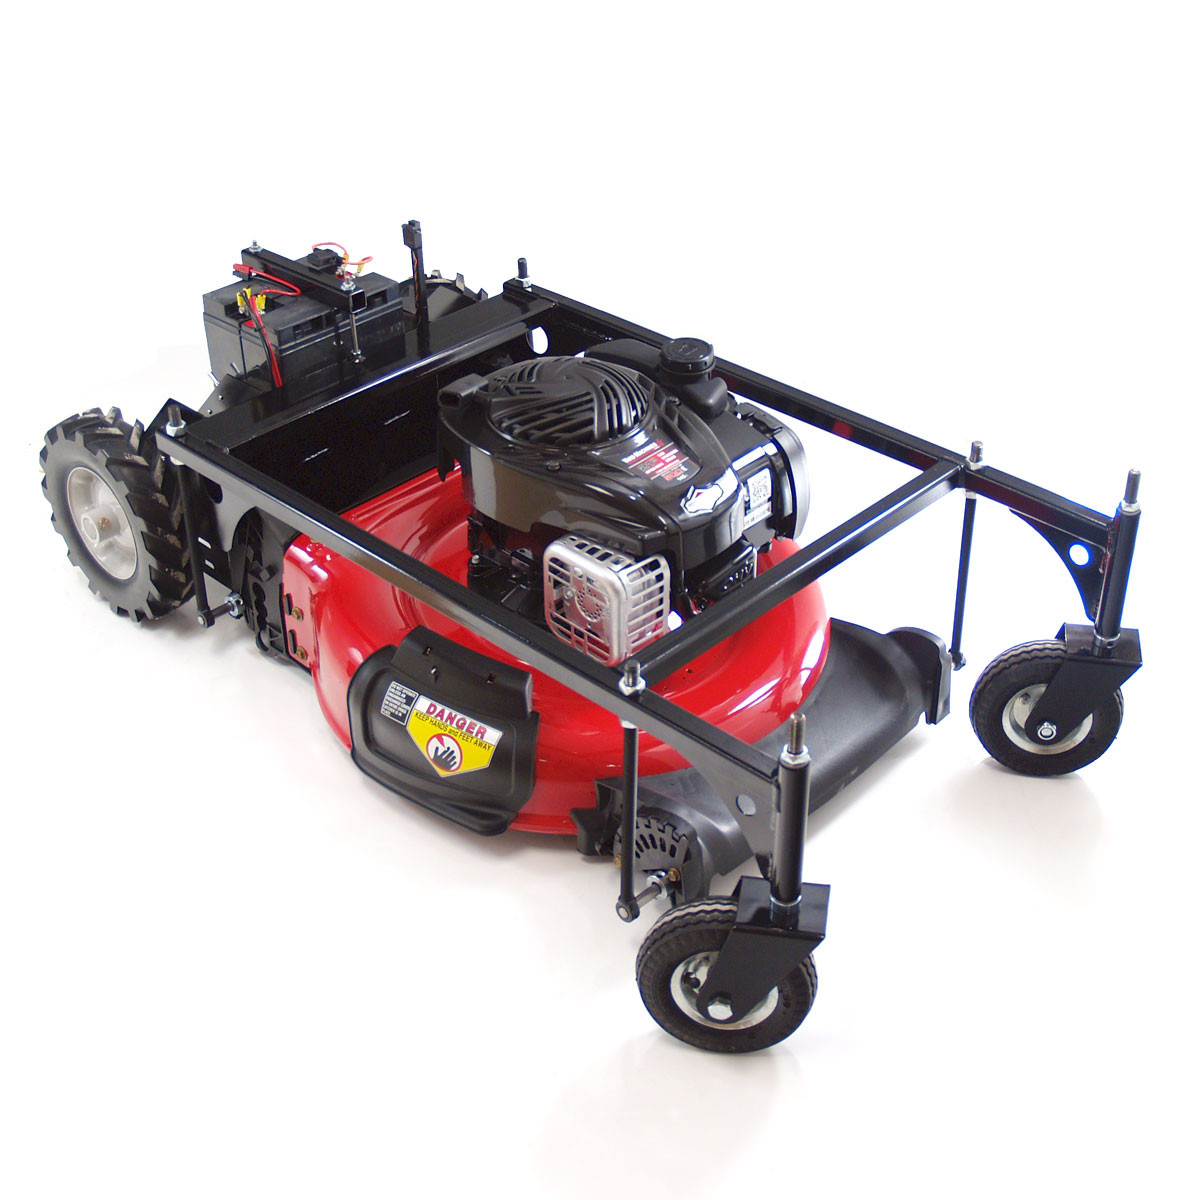 DIY Remote Control Lawn Mower Kit
 NEW Prebuilt 2WD Lawn Mower IG52 DB SOLD